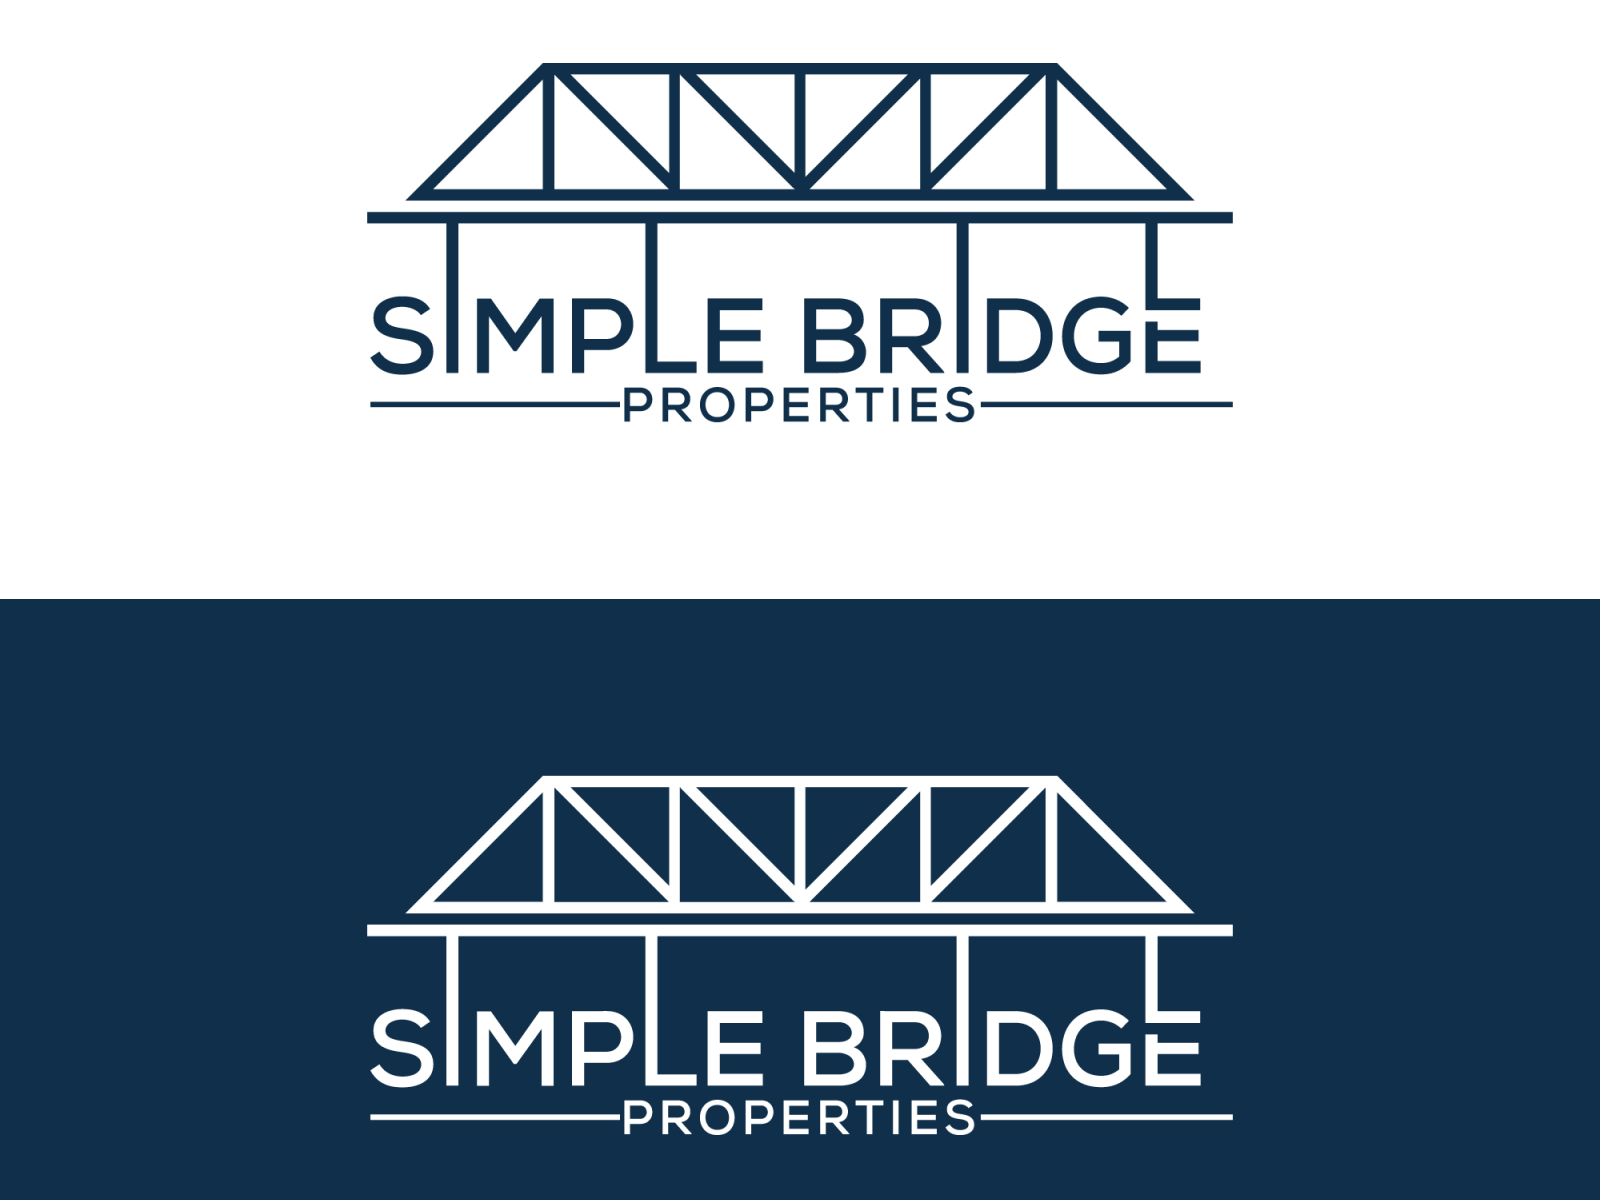 Simple Bridge Properties Logo by MD NAYON KARIGOR on Dribbble